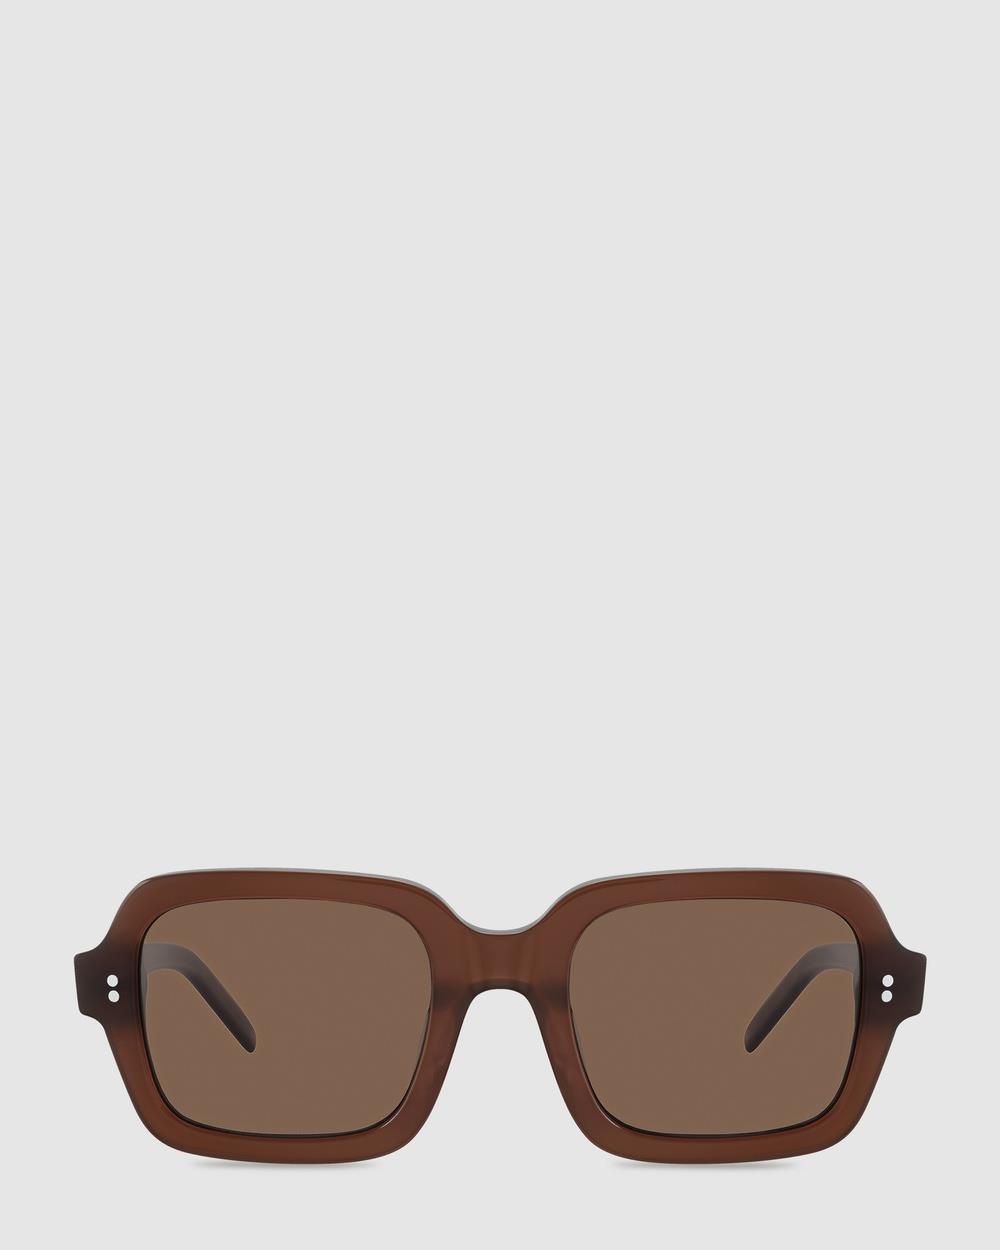 Status Anxiety - Vacation Sunglasses - Sunglasses (Brown) Vacation Sunglasses